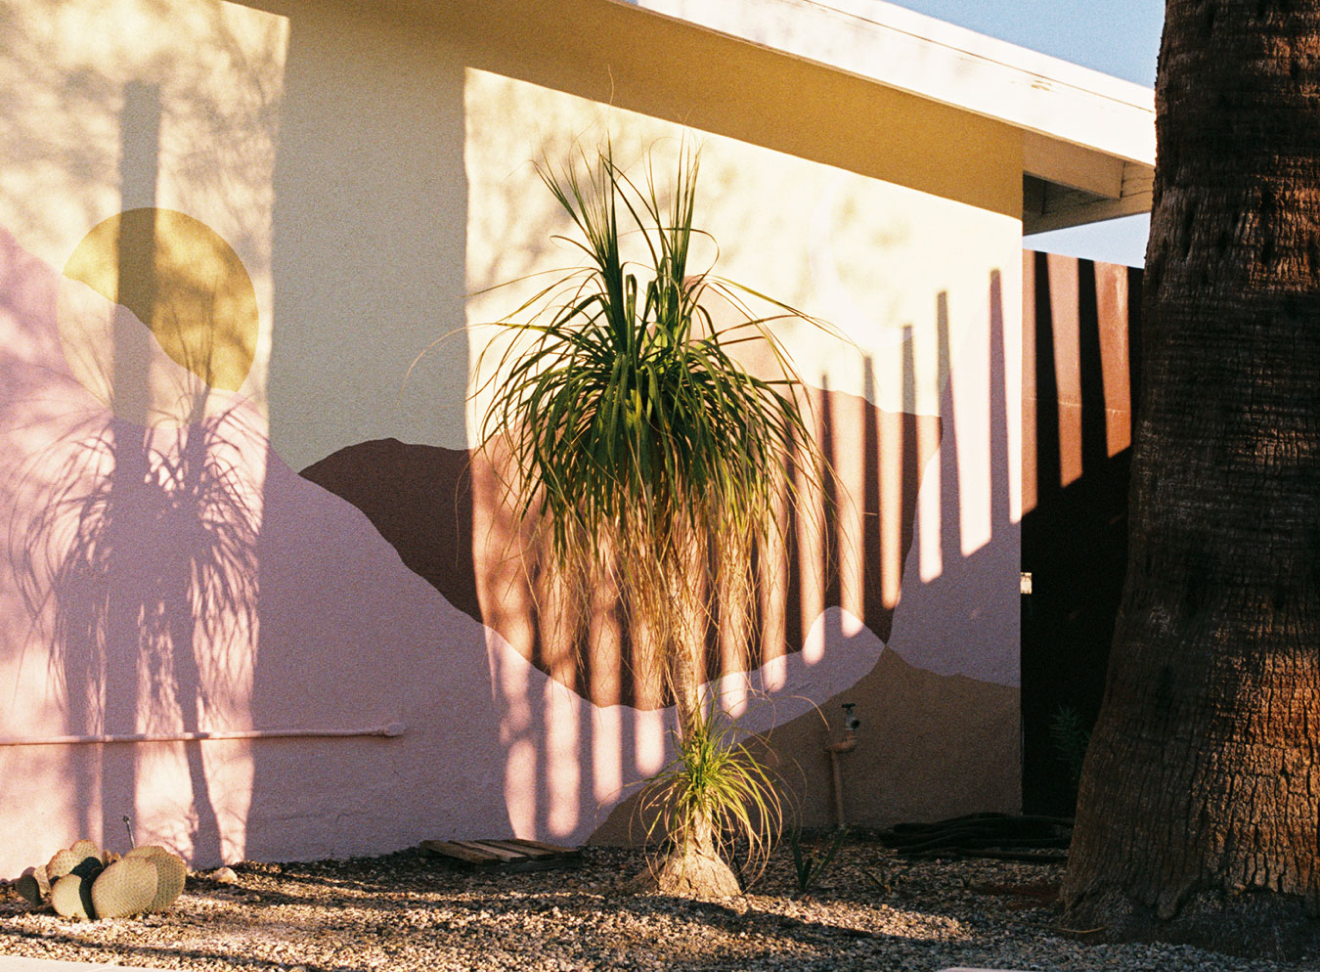 Miracle Manor exterior in Desert Hot Springs. Photograph by Jordan Romanoff